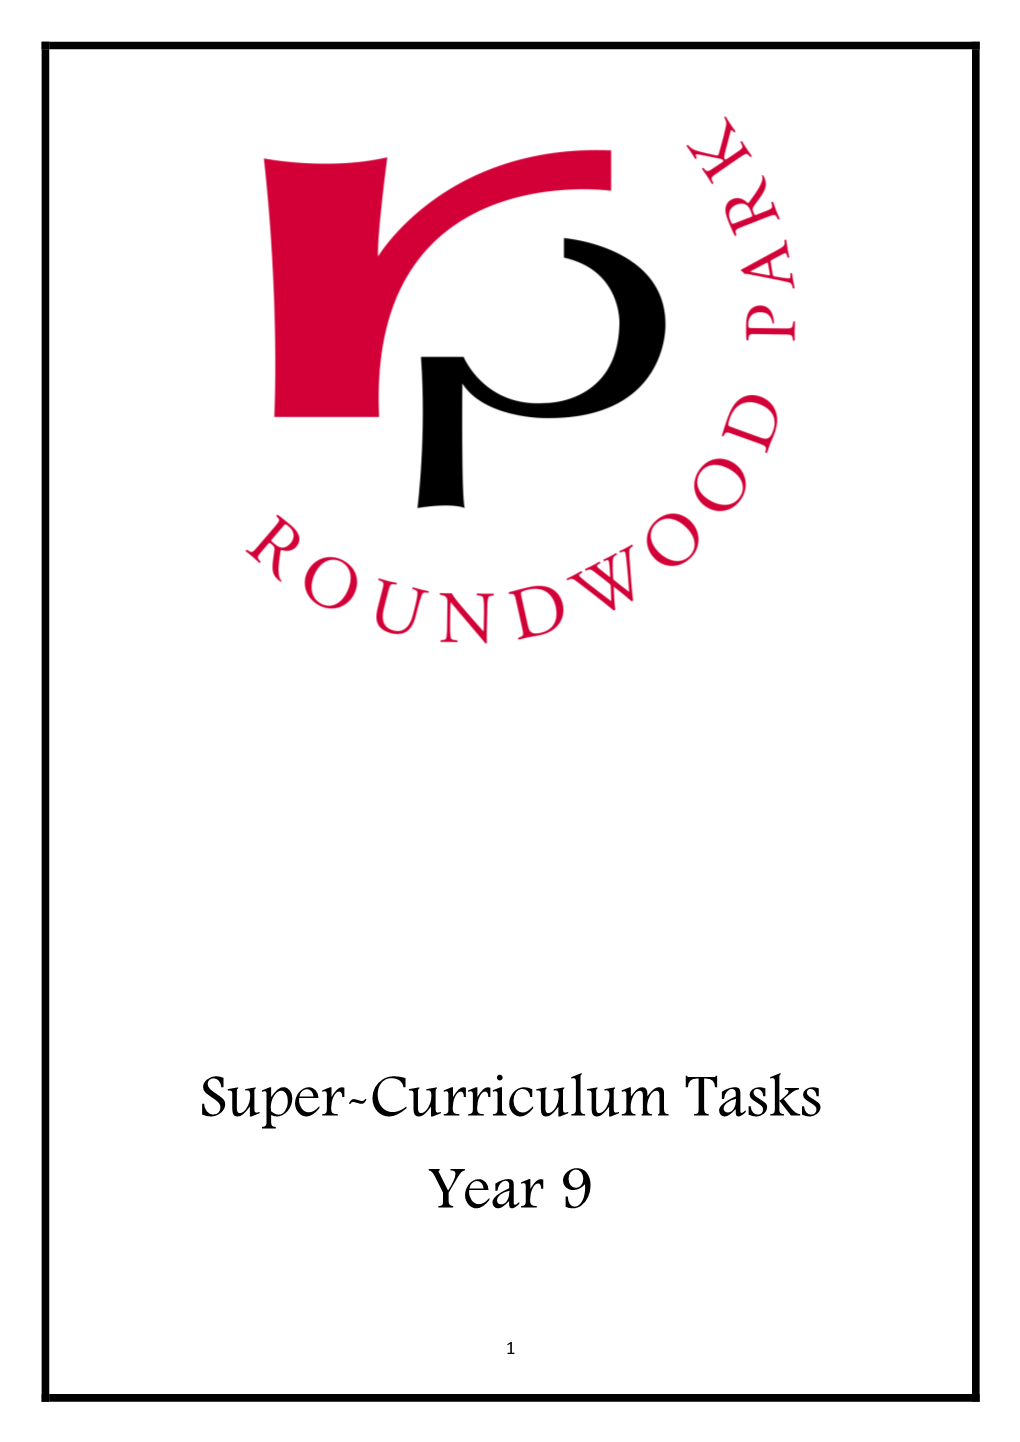 Super-Curriculum Tasks Year 9